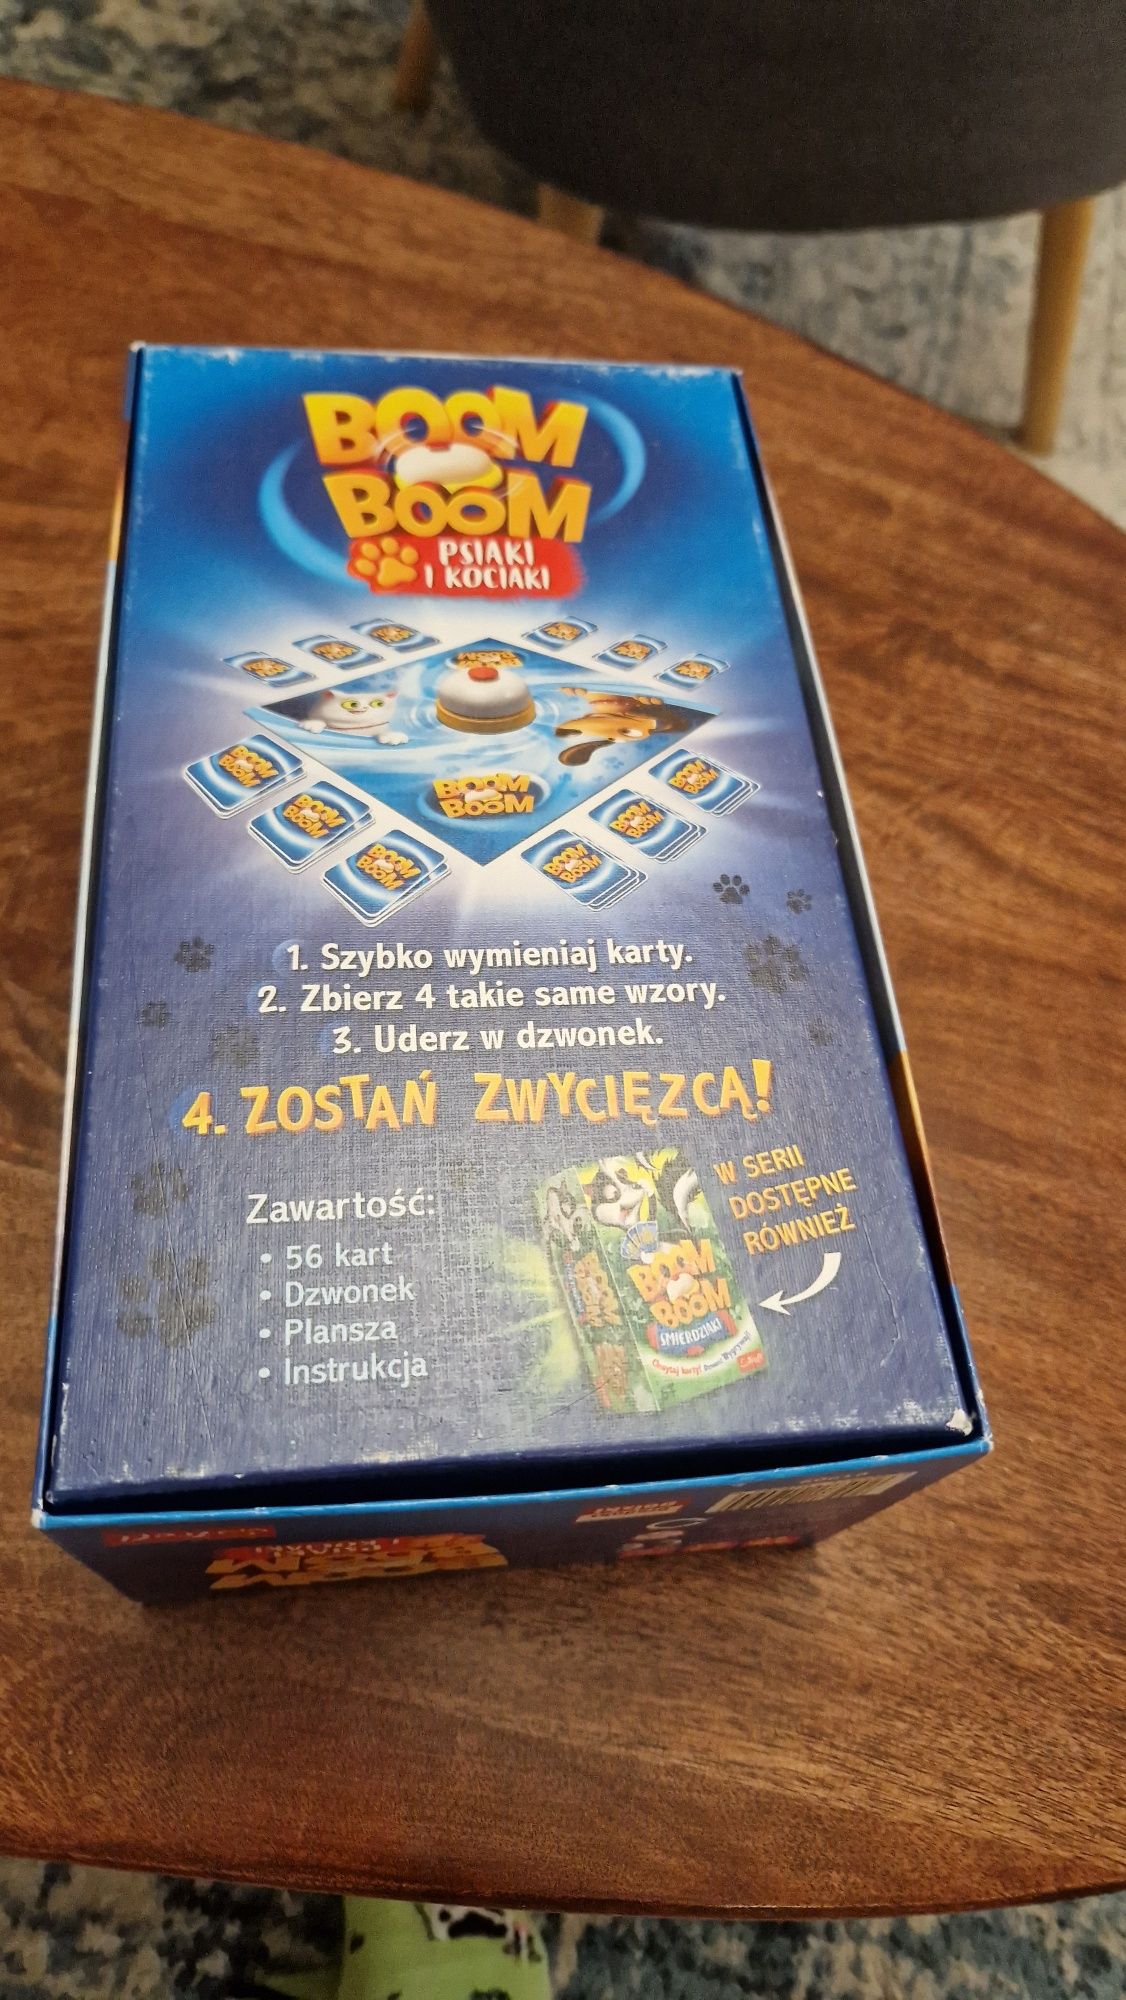 Gra "Boom Boom" dla dzieci